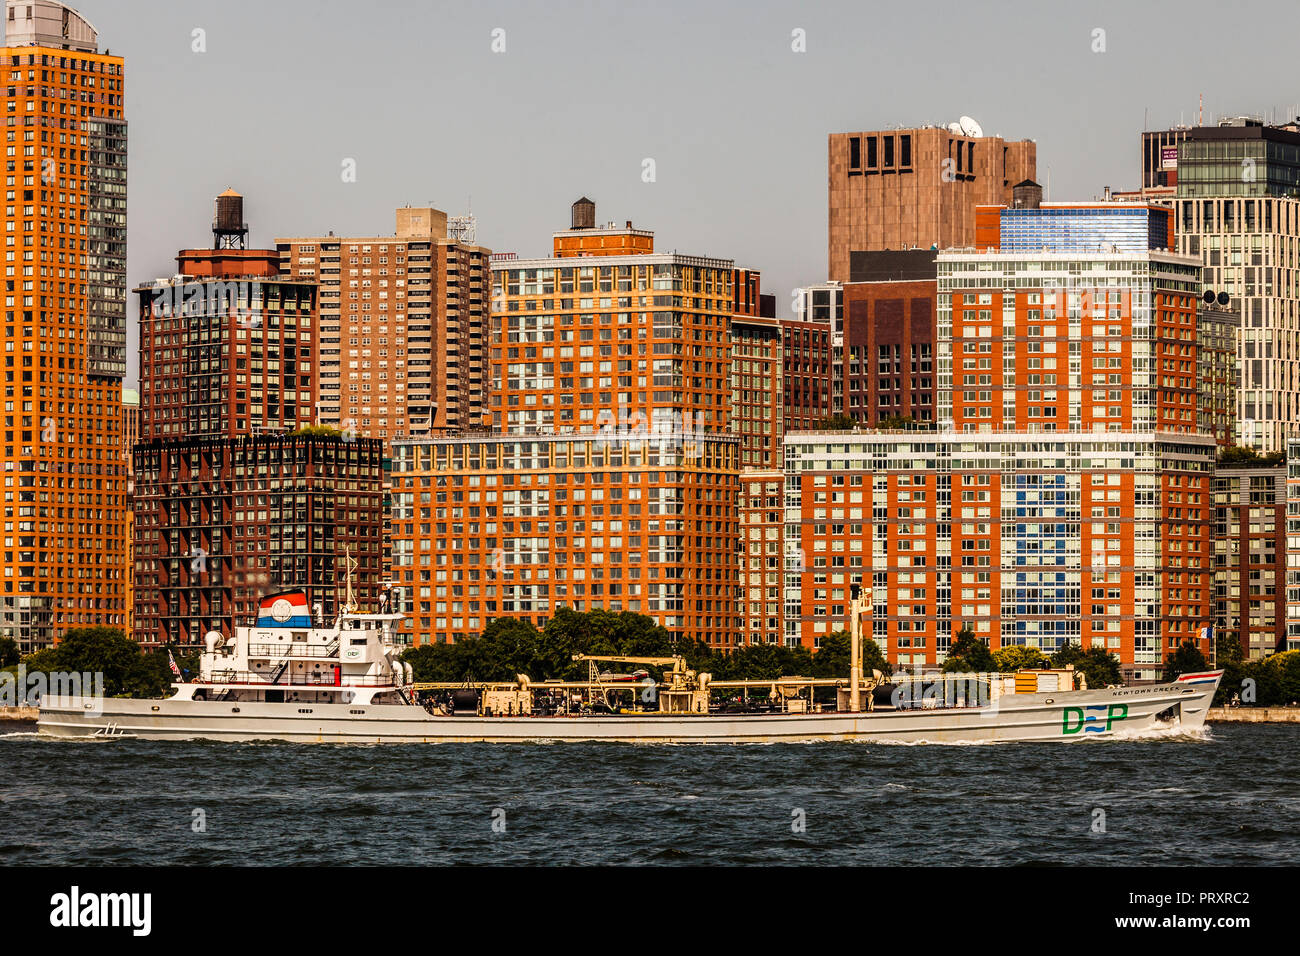 Le port de New York Manhattan - New York, New York, USA Banque D'Images